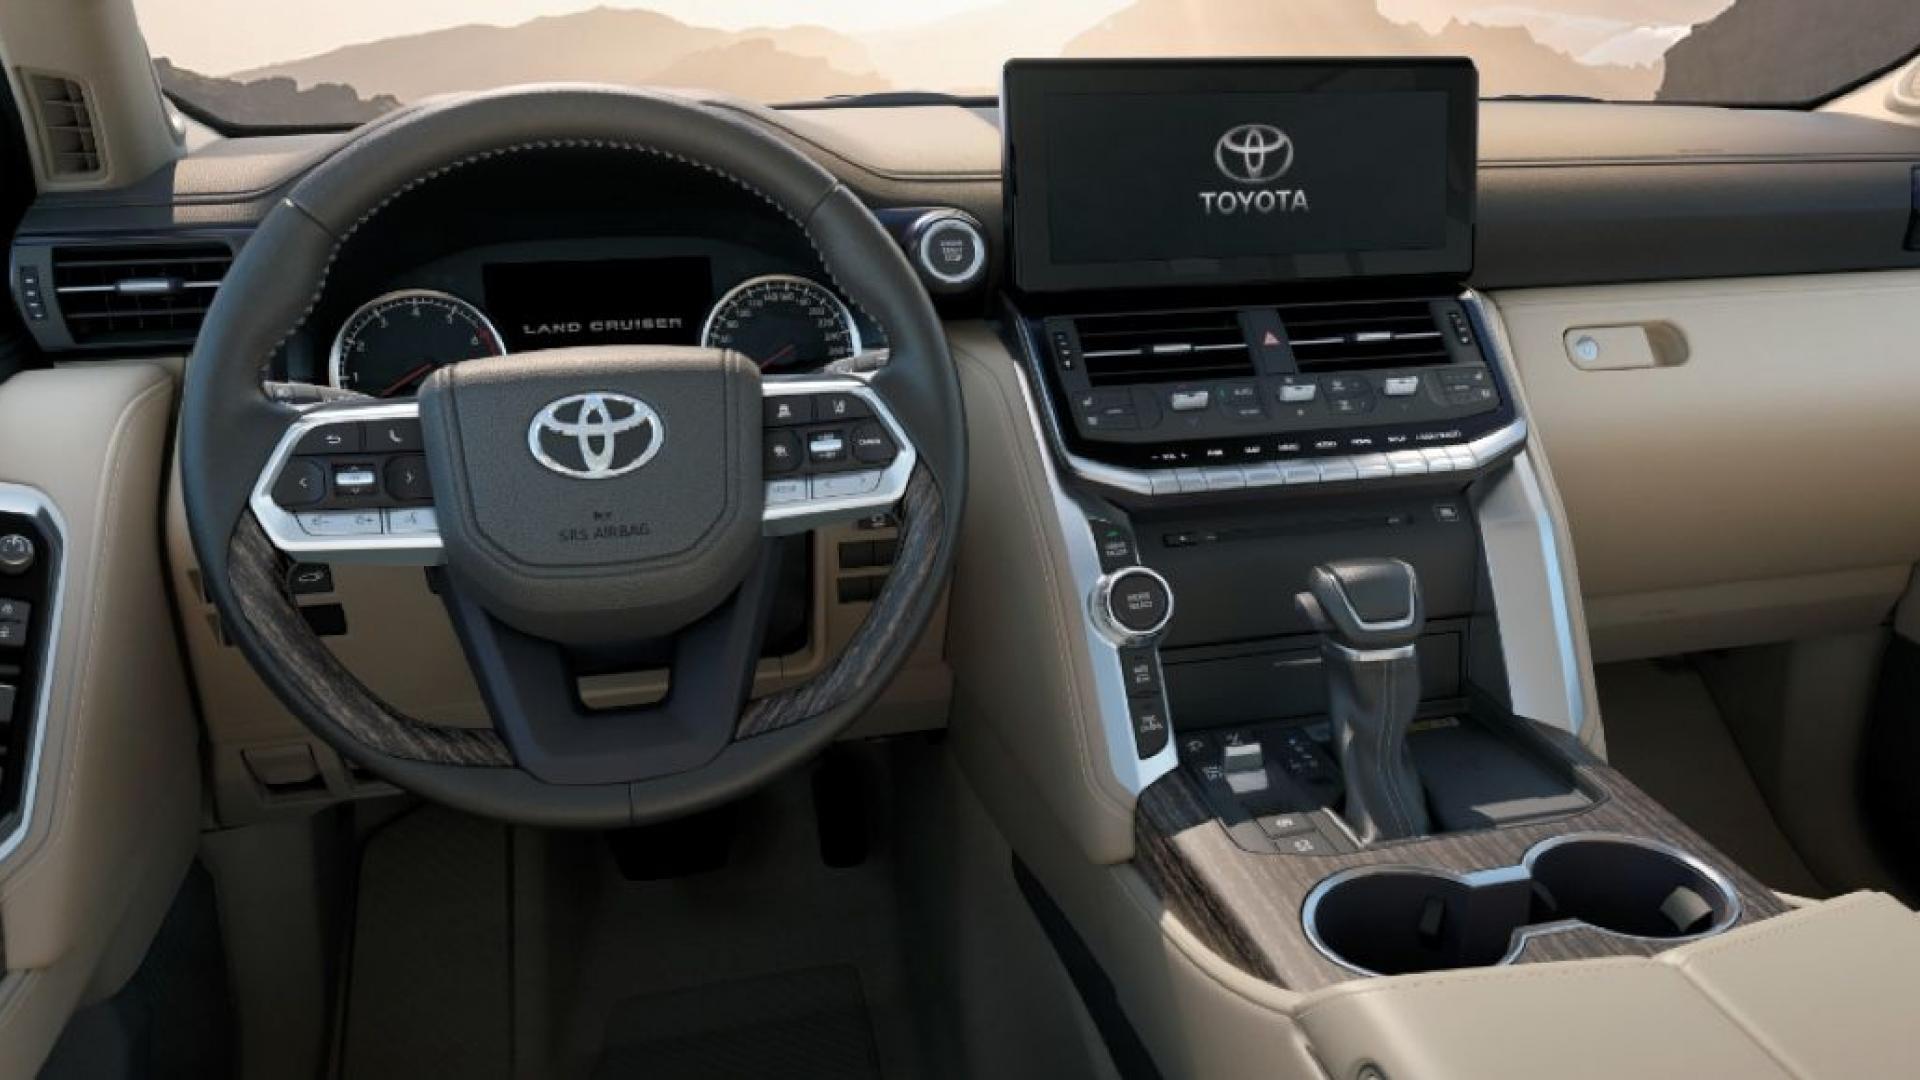 Toyota Land Crusier - Technology